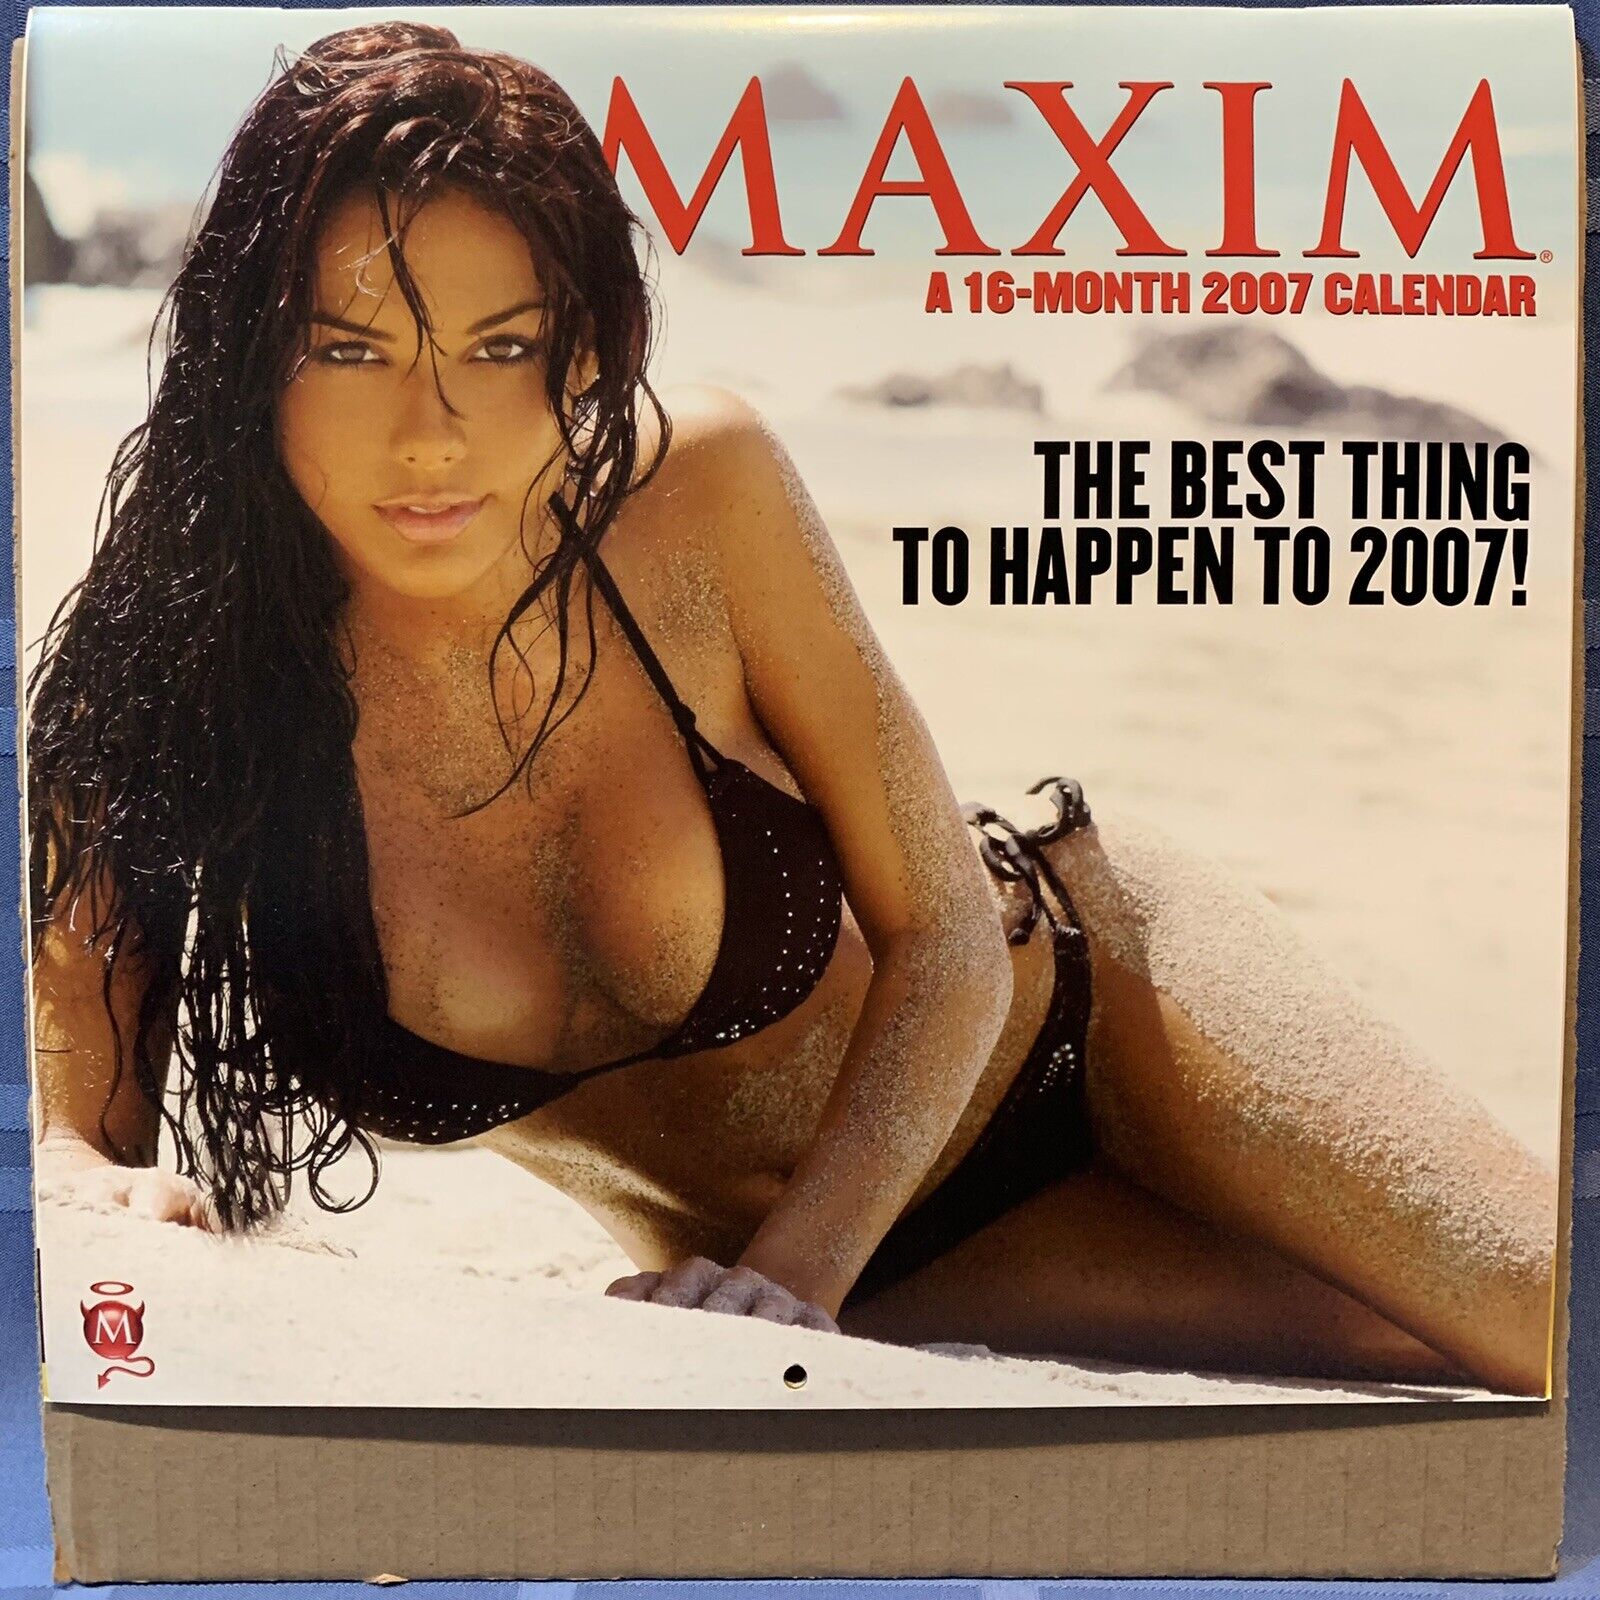 Maxim 2007 16-month swimsuit models calendar Chrissy Teigen